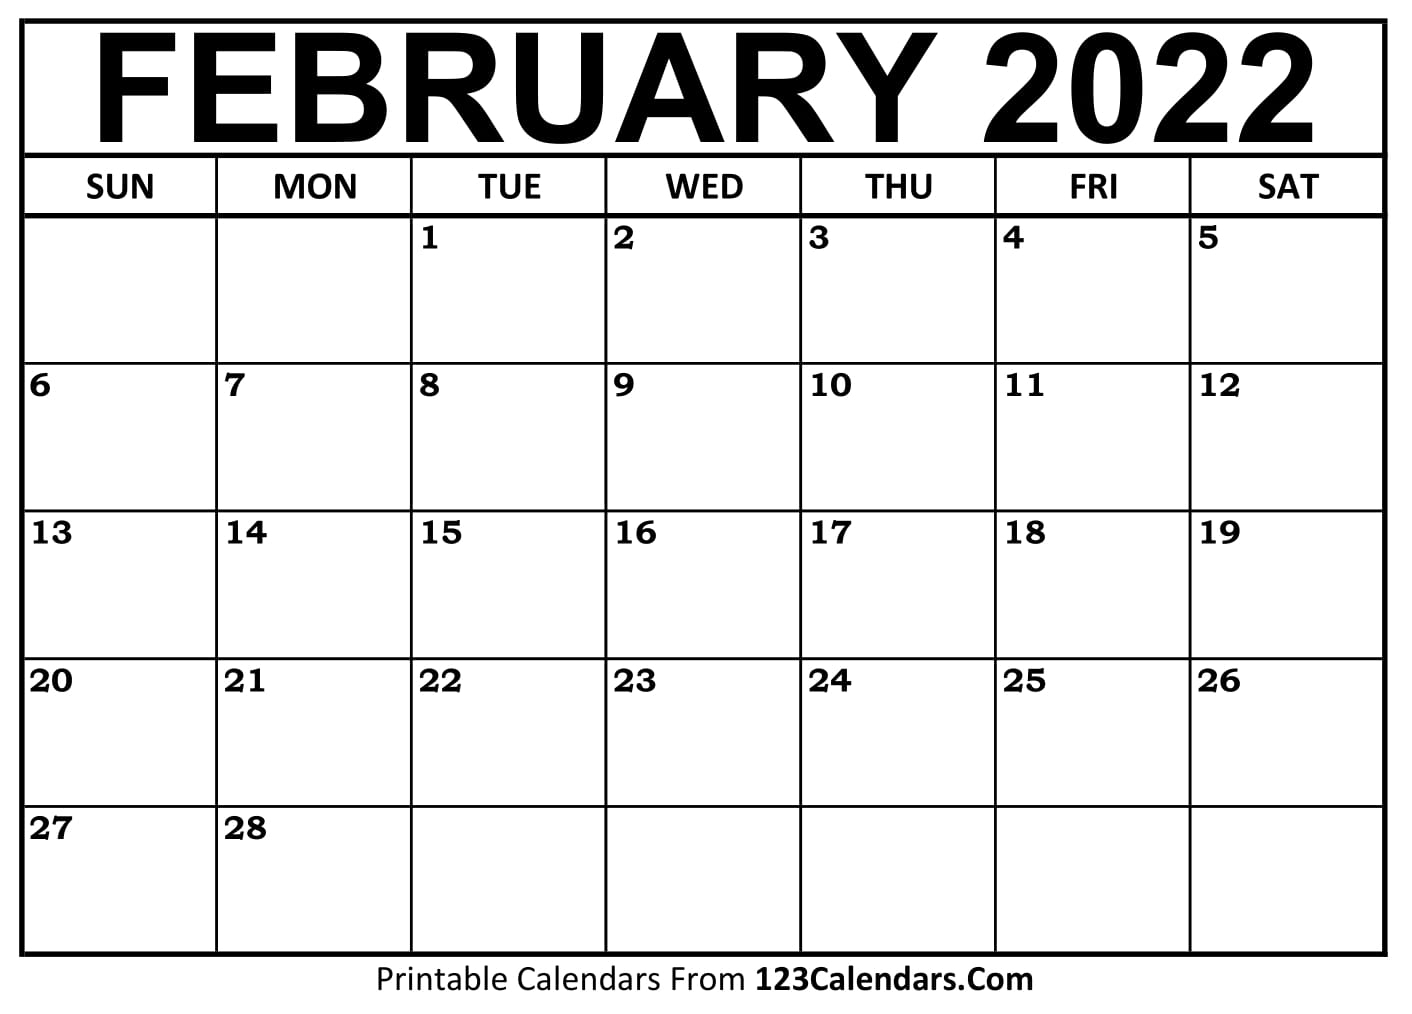 February 2022 Calendar Printable 123Calendars - 2023